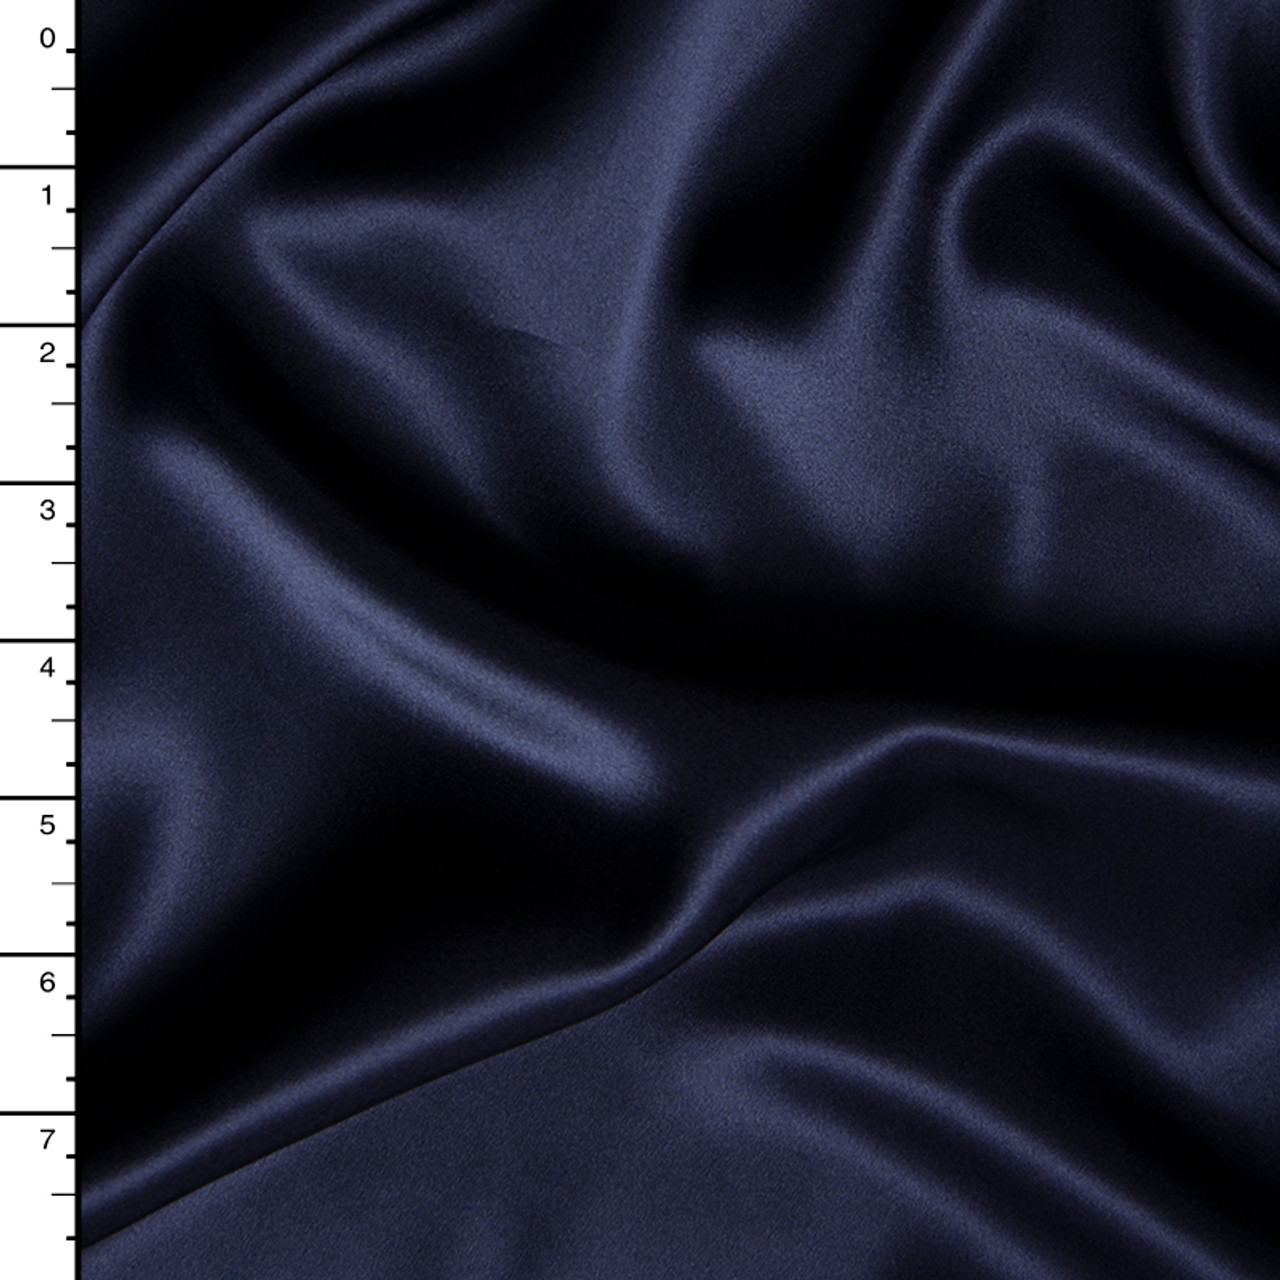 Cali Fabrics  Navy Blue Charmeuse Satin